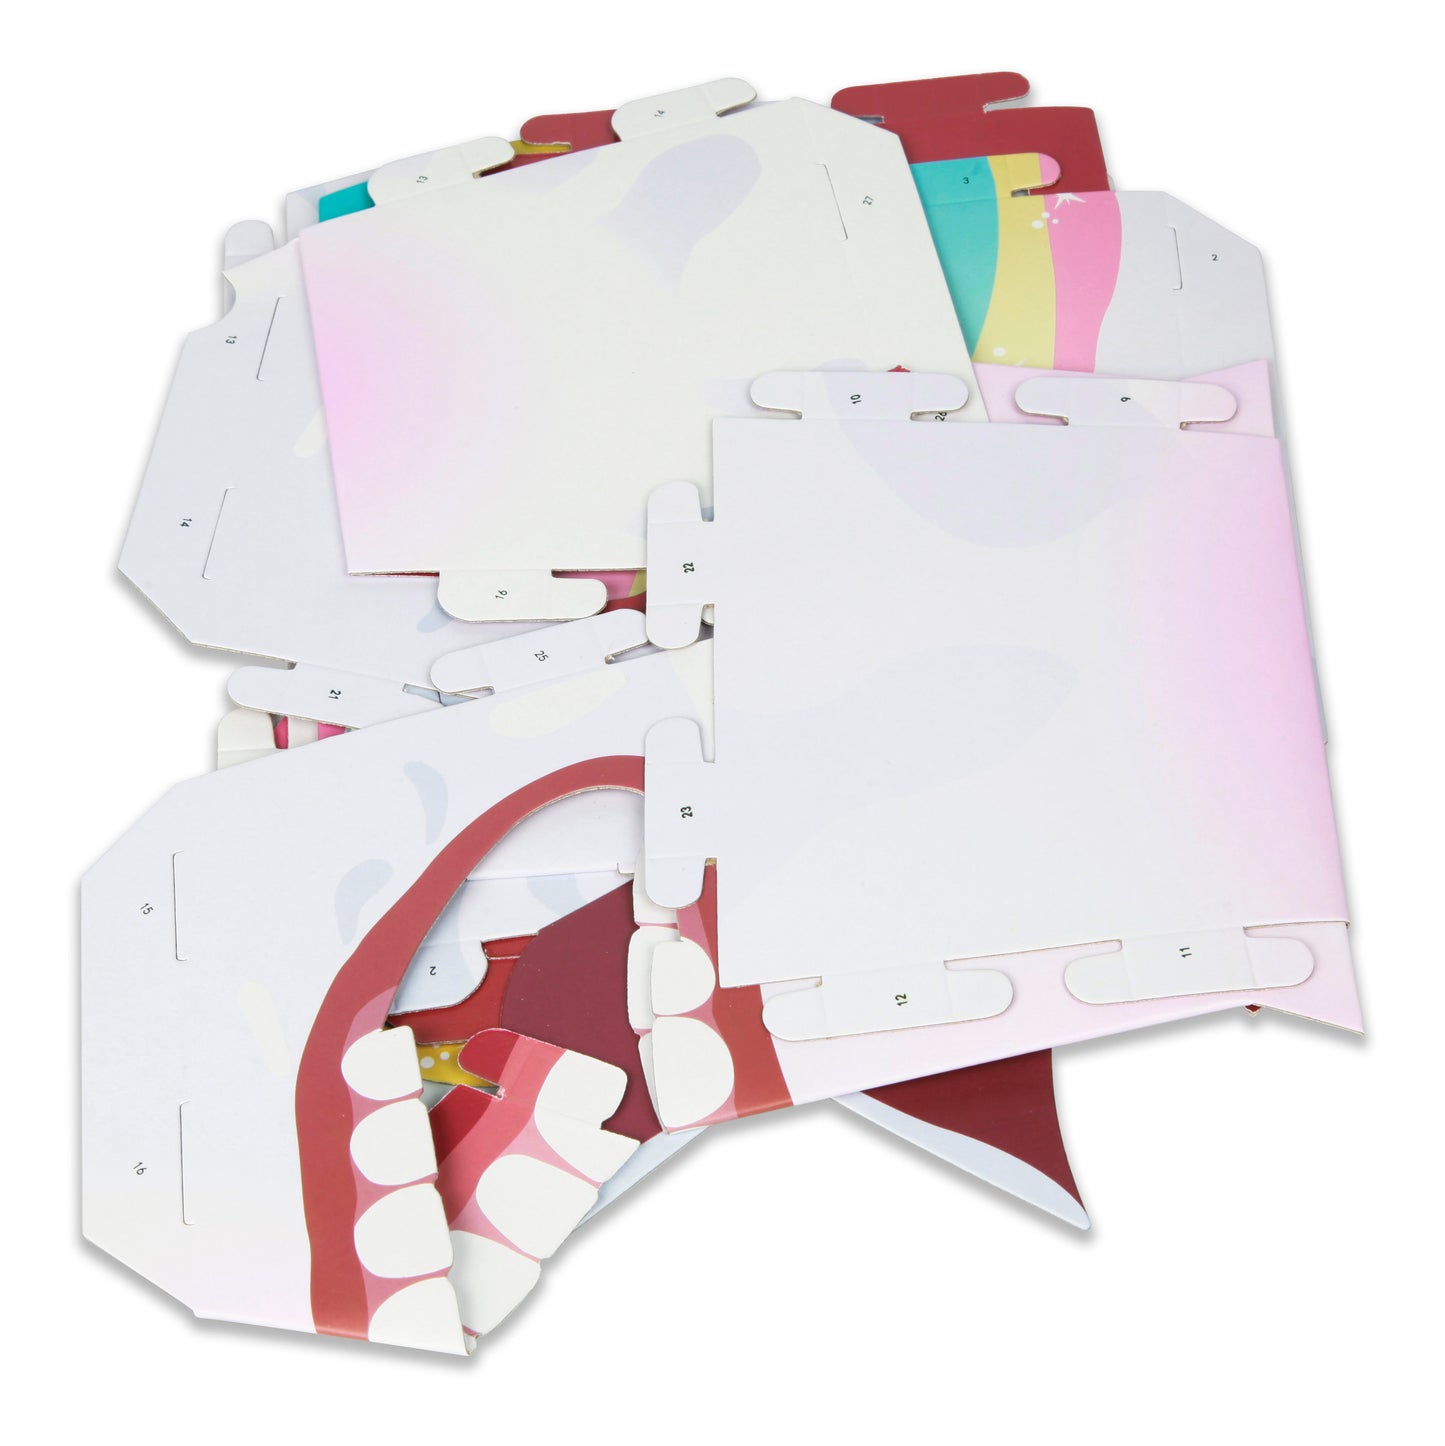 Unicorn 3D Mask - Card Craft